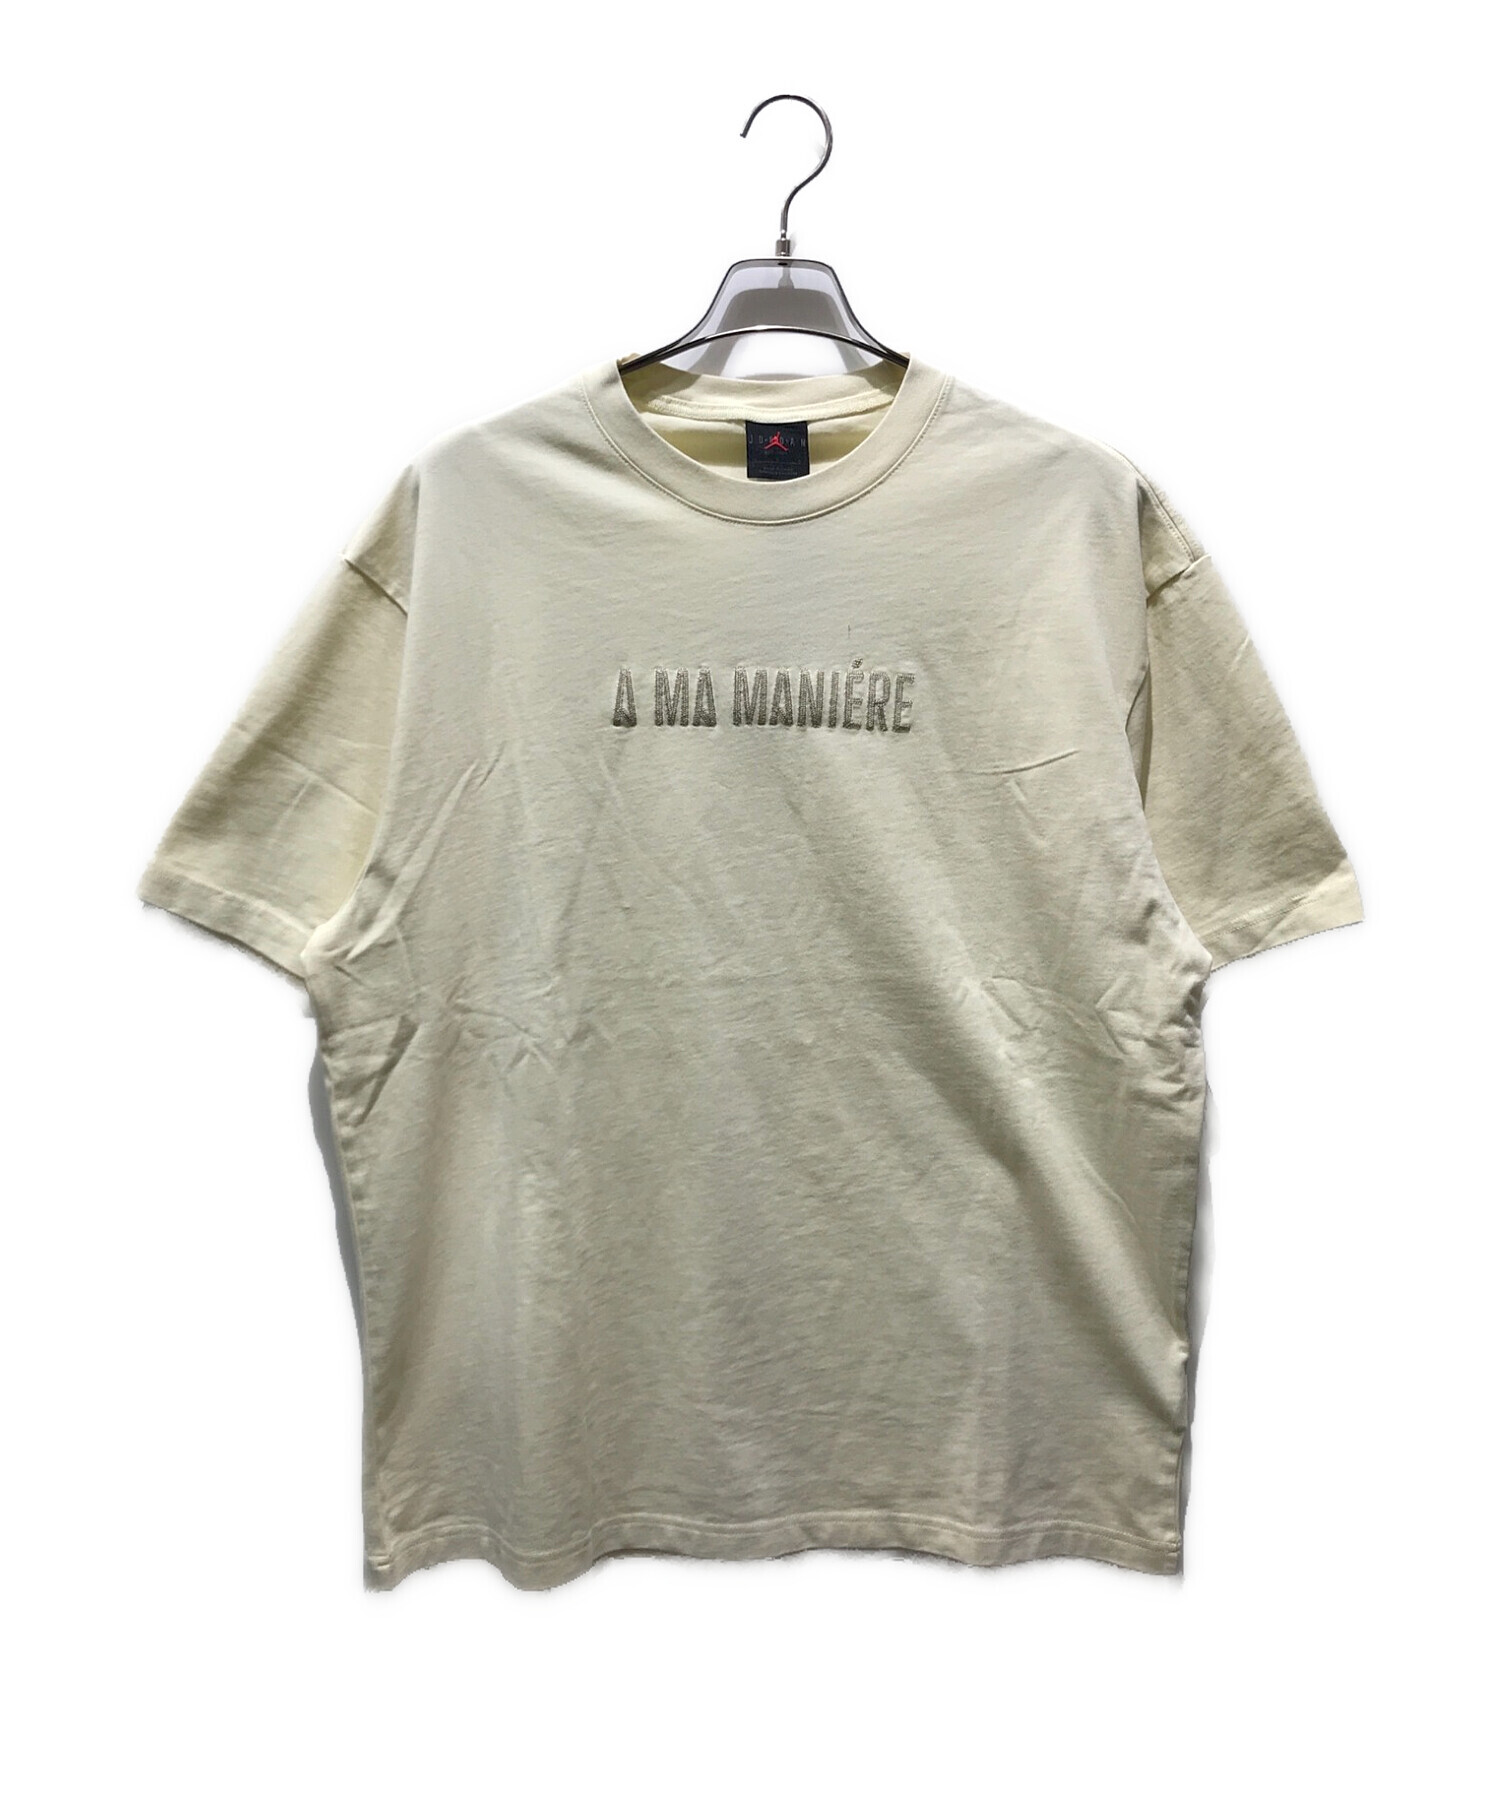 JORDAN (ジョーダン) A Ma Maniere (アママニエール) 刺繍Tシャツ ベージュ サイズ:Ⅼ 未使用品